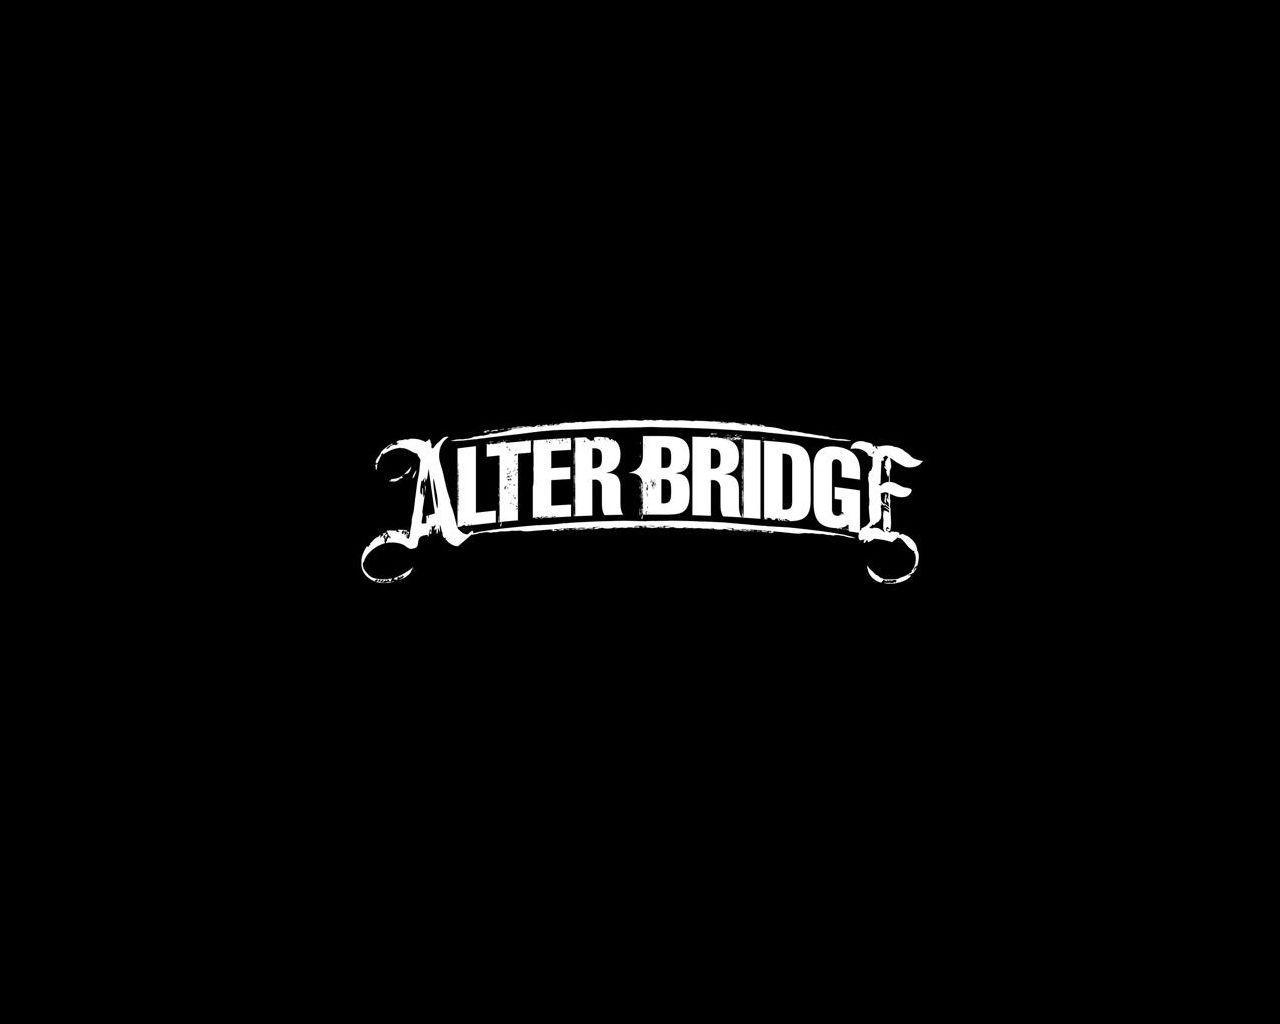 Alter Bridge Simple Wallpaper